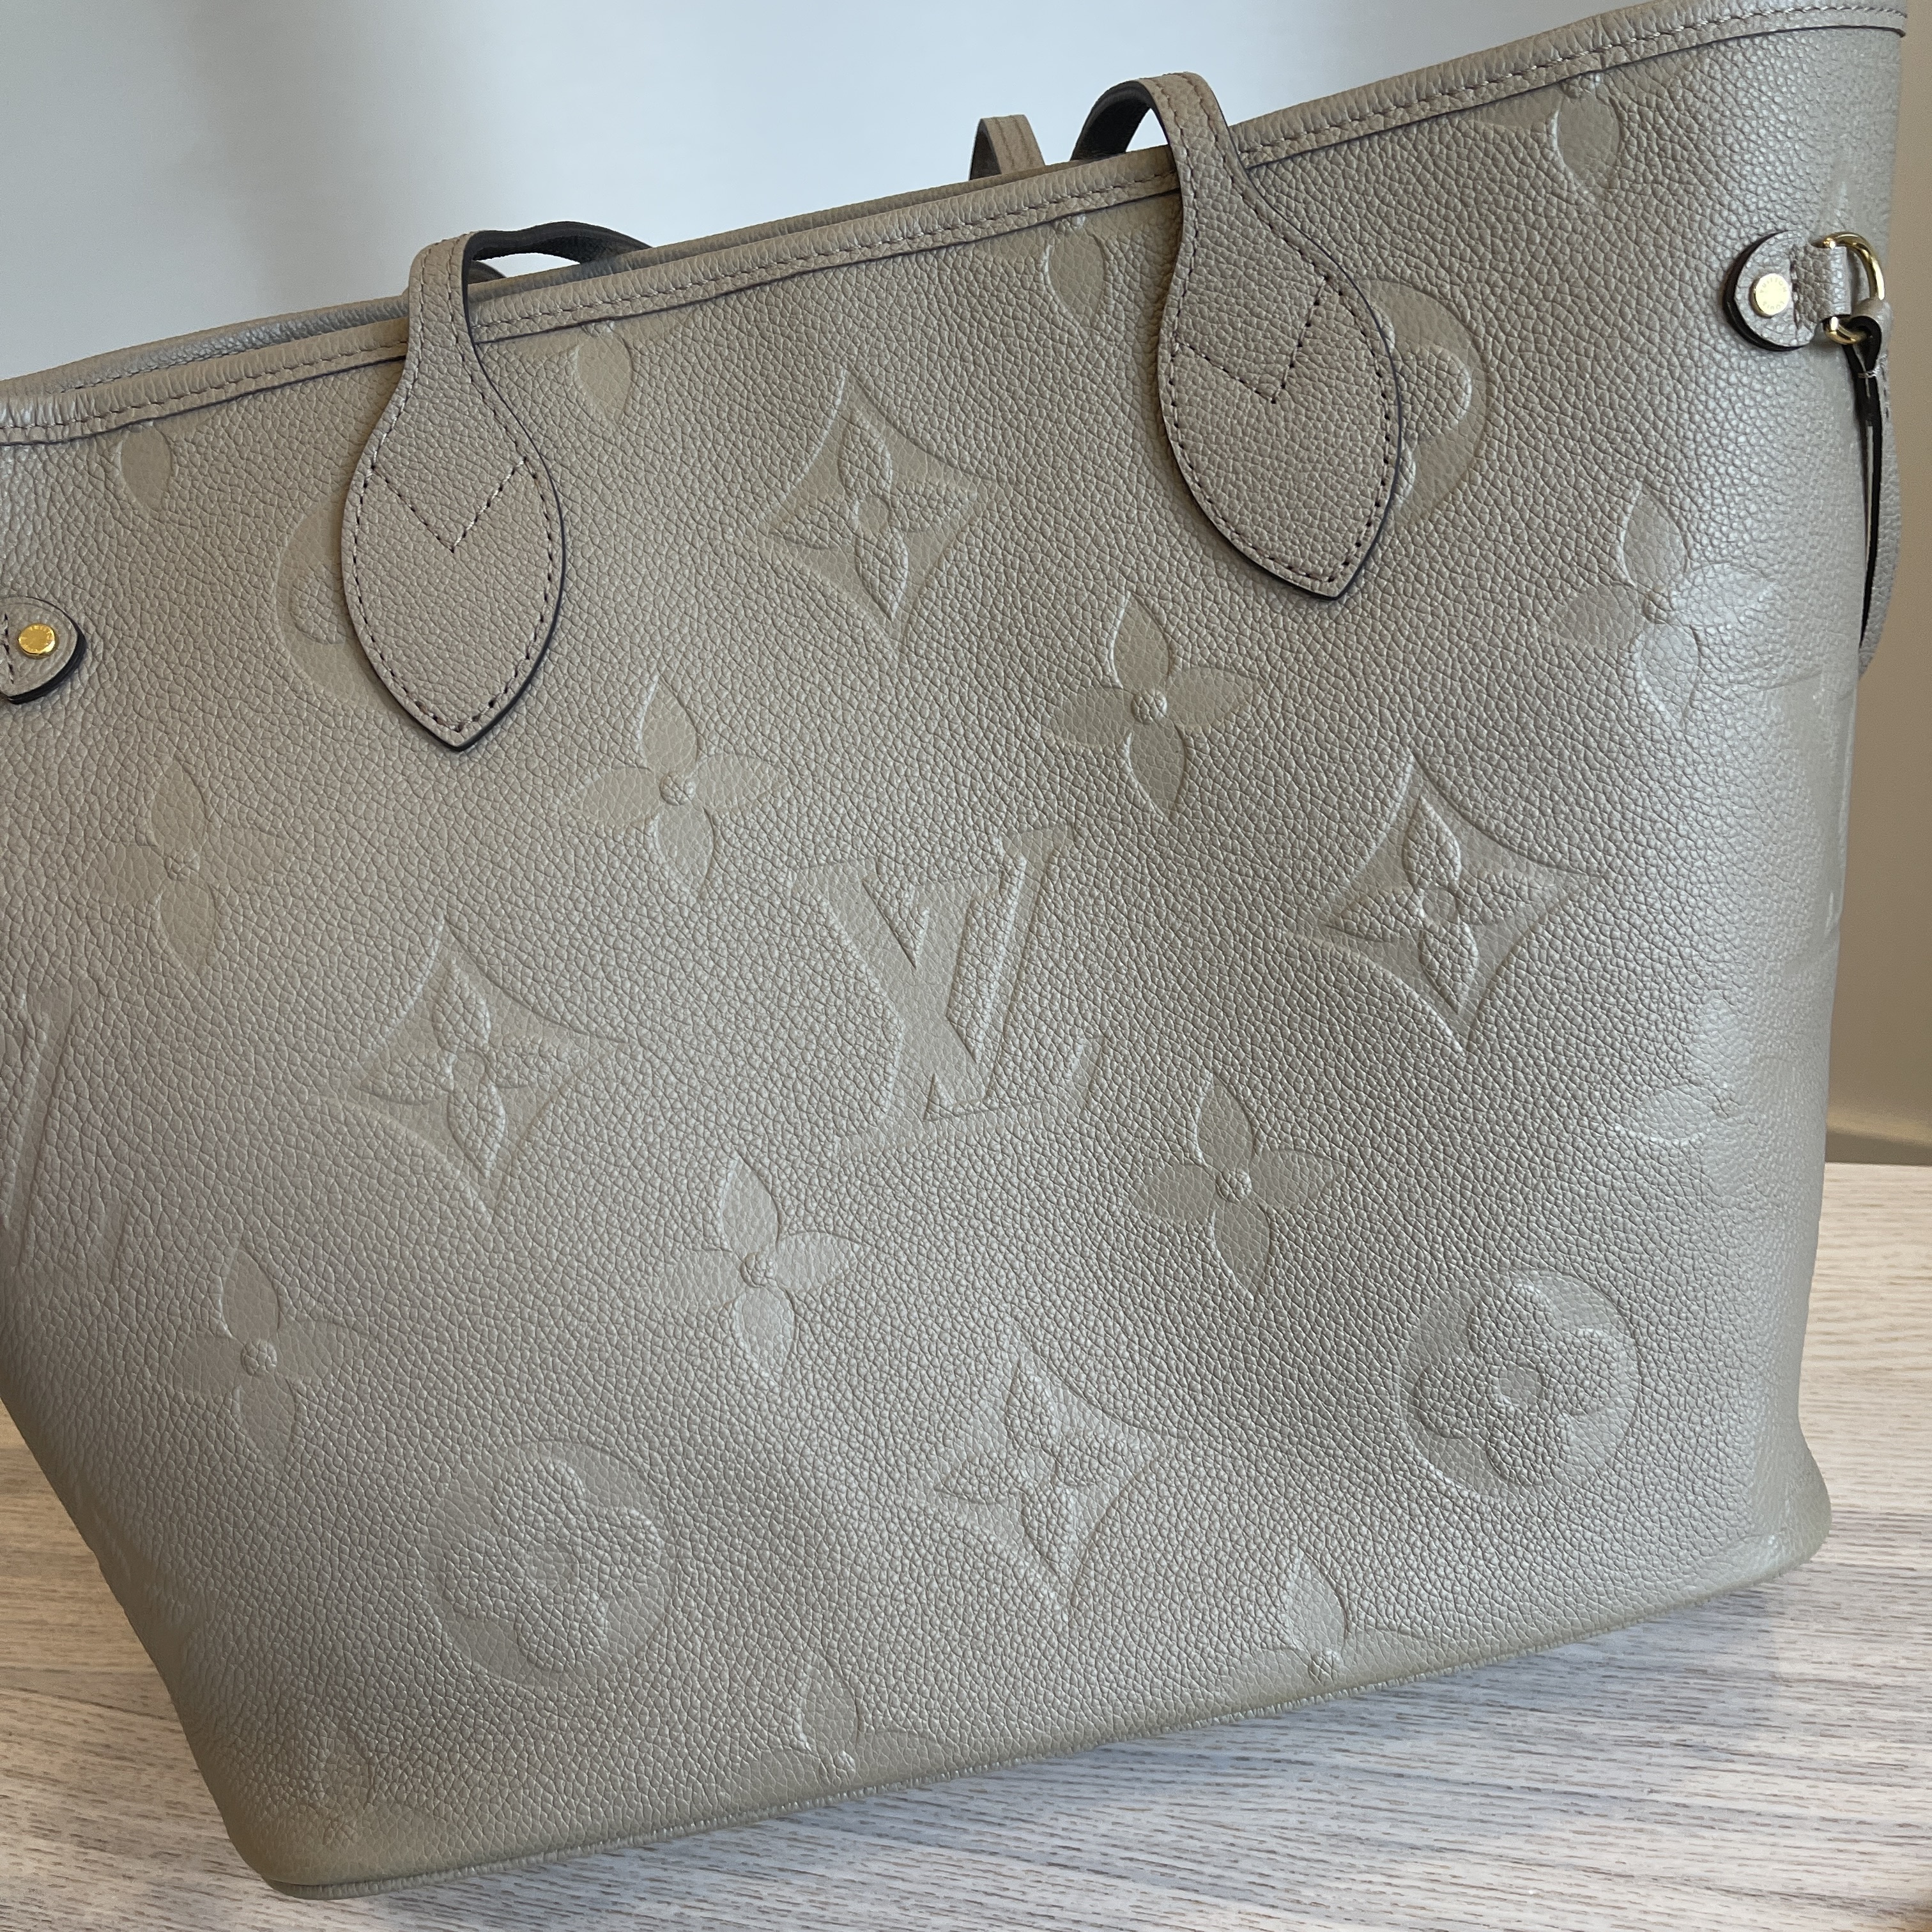 Louis Vuitton Turtle Dove Empreinte Leather Neverfull MM Bag